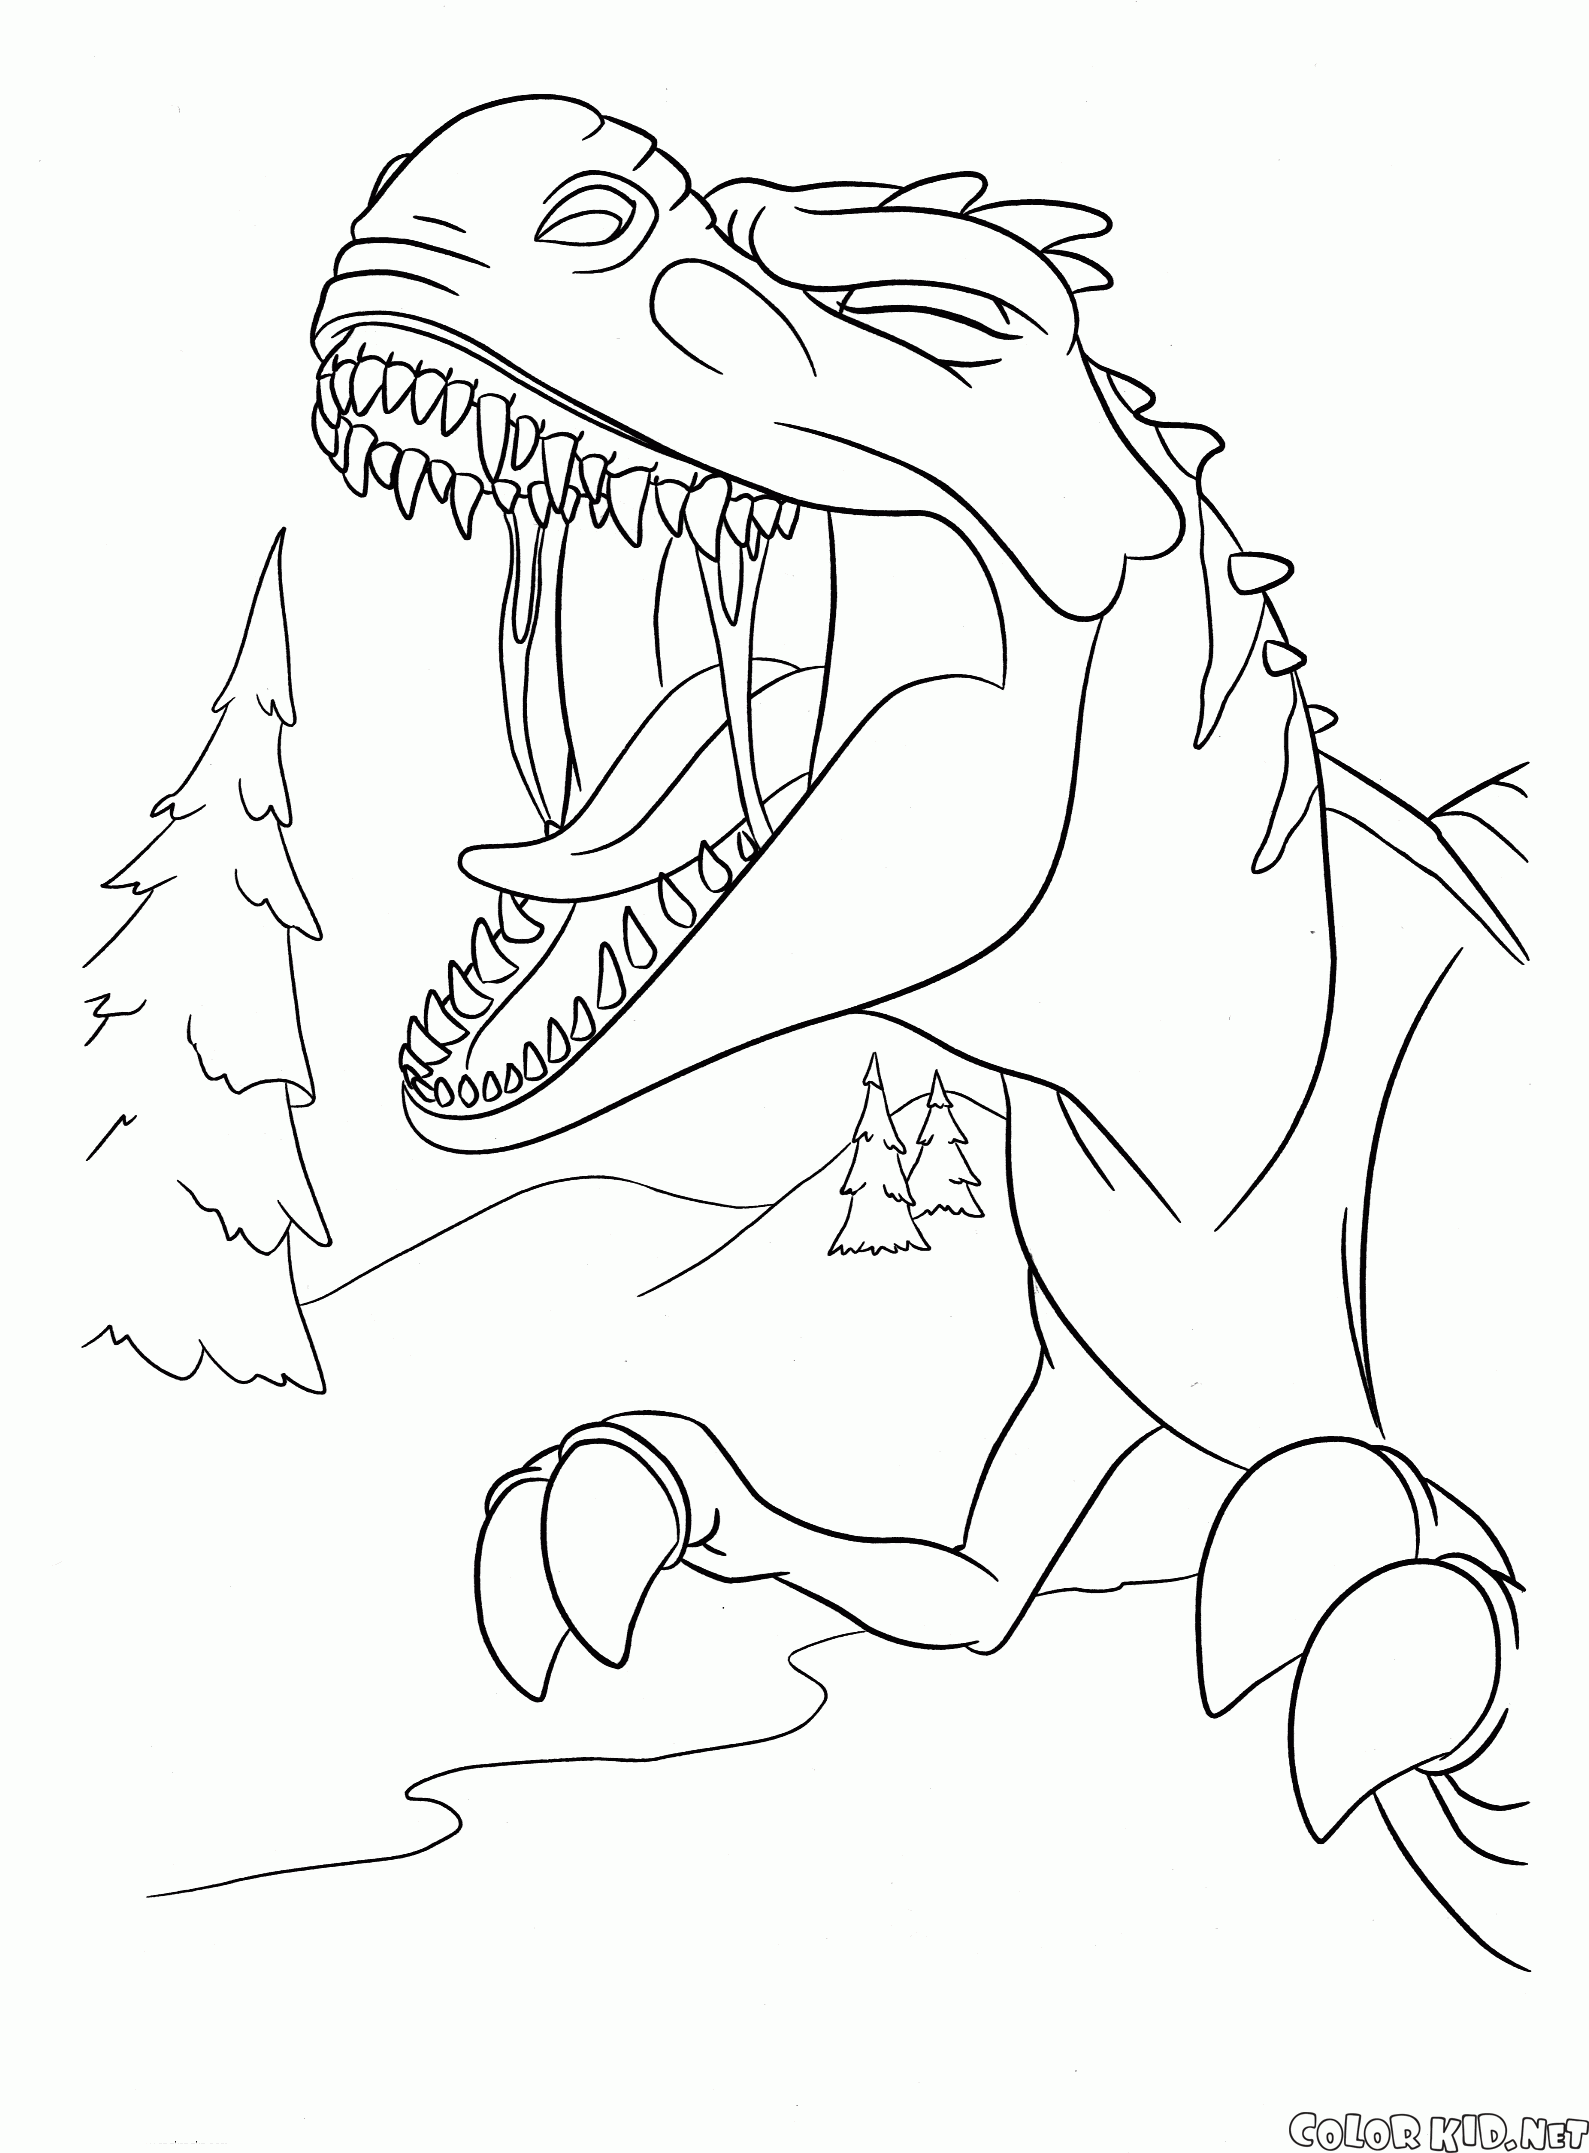 Coloring page - Rugido alto do dinossauro